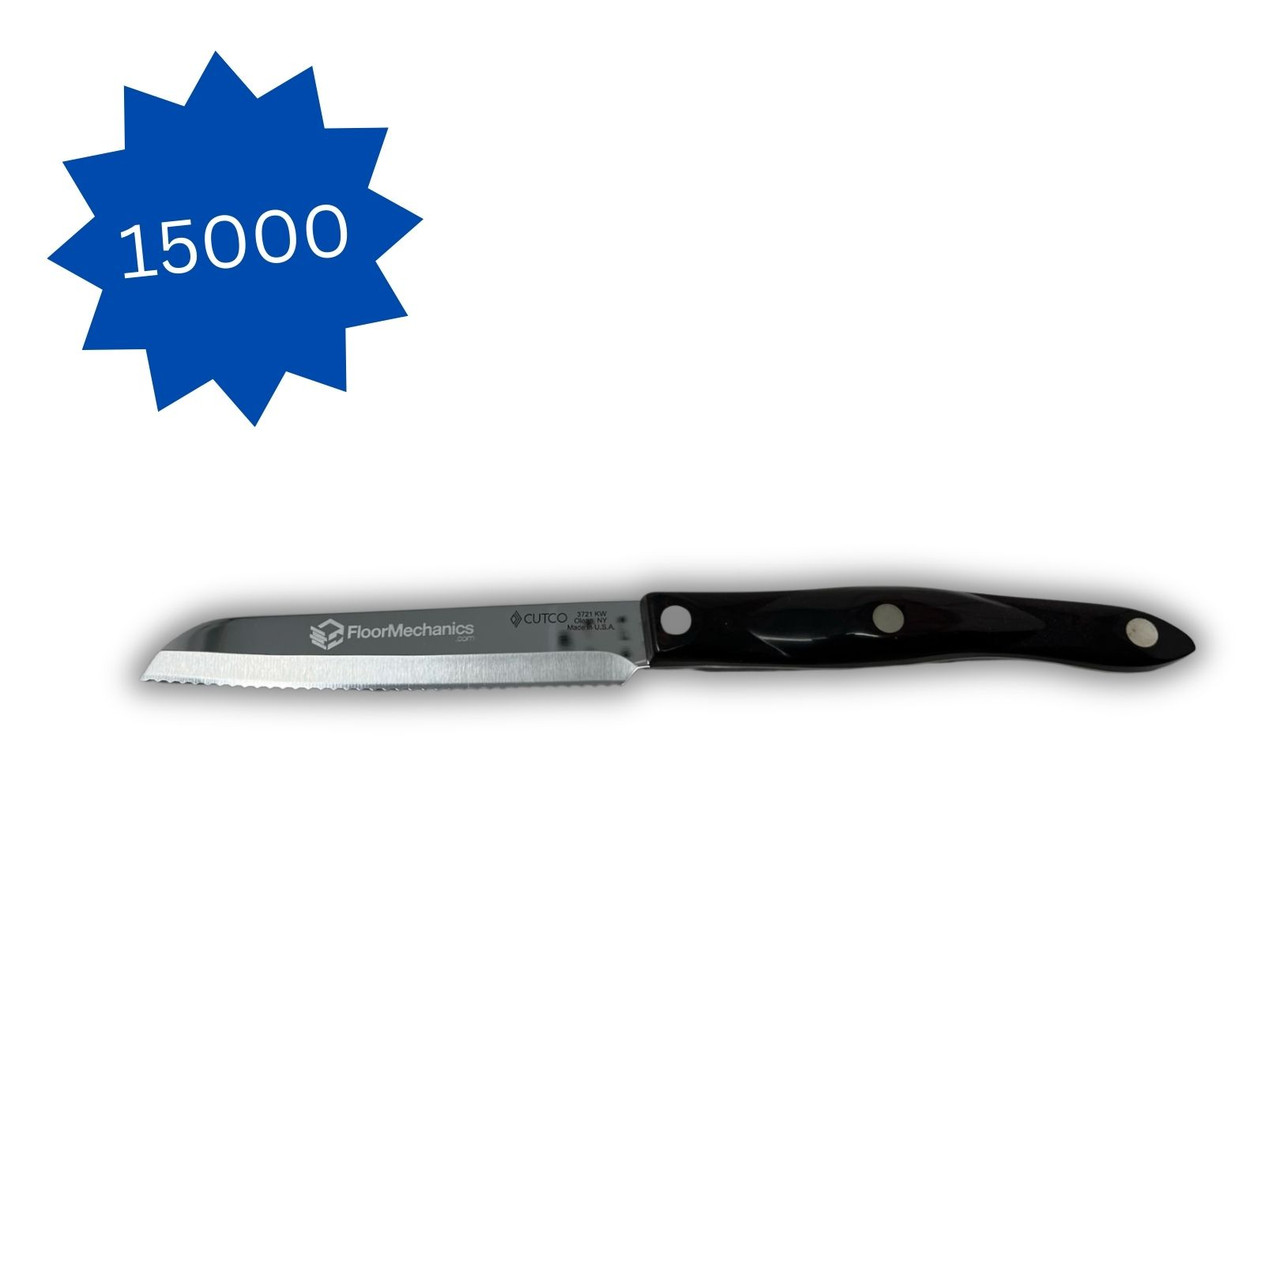 Floor Mechanics Cutco Knives - 15000 points